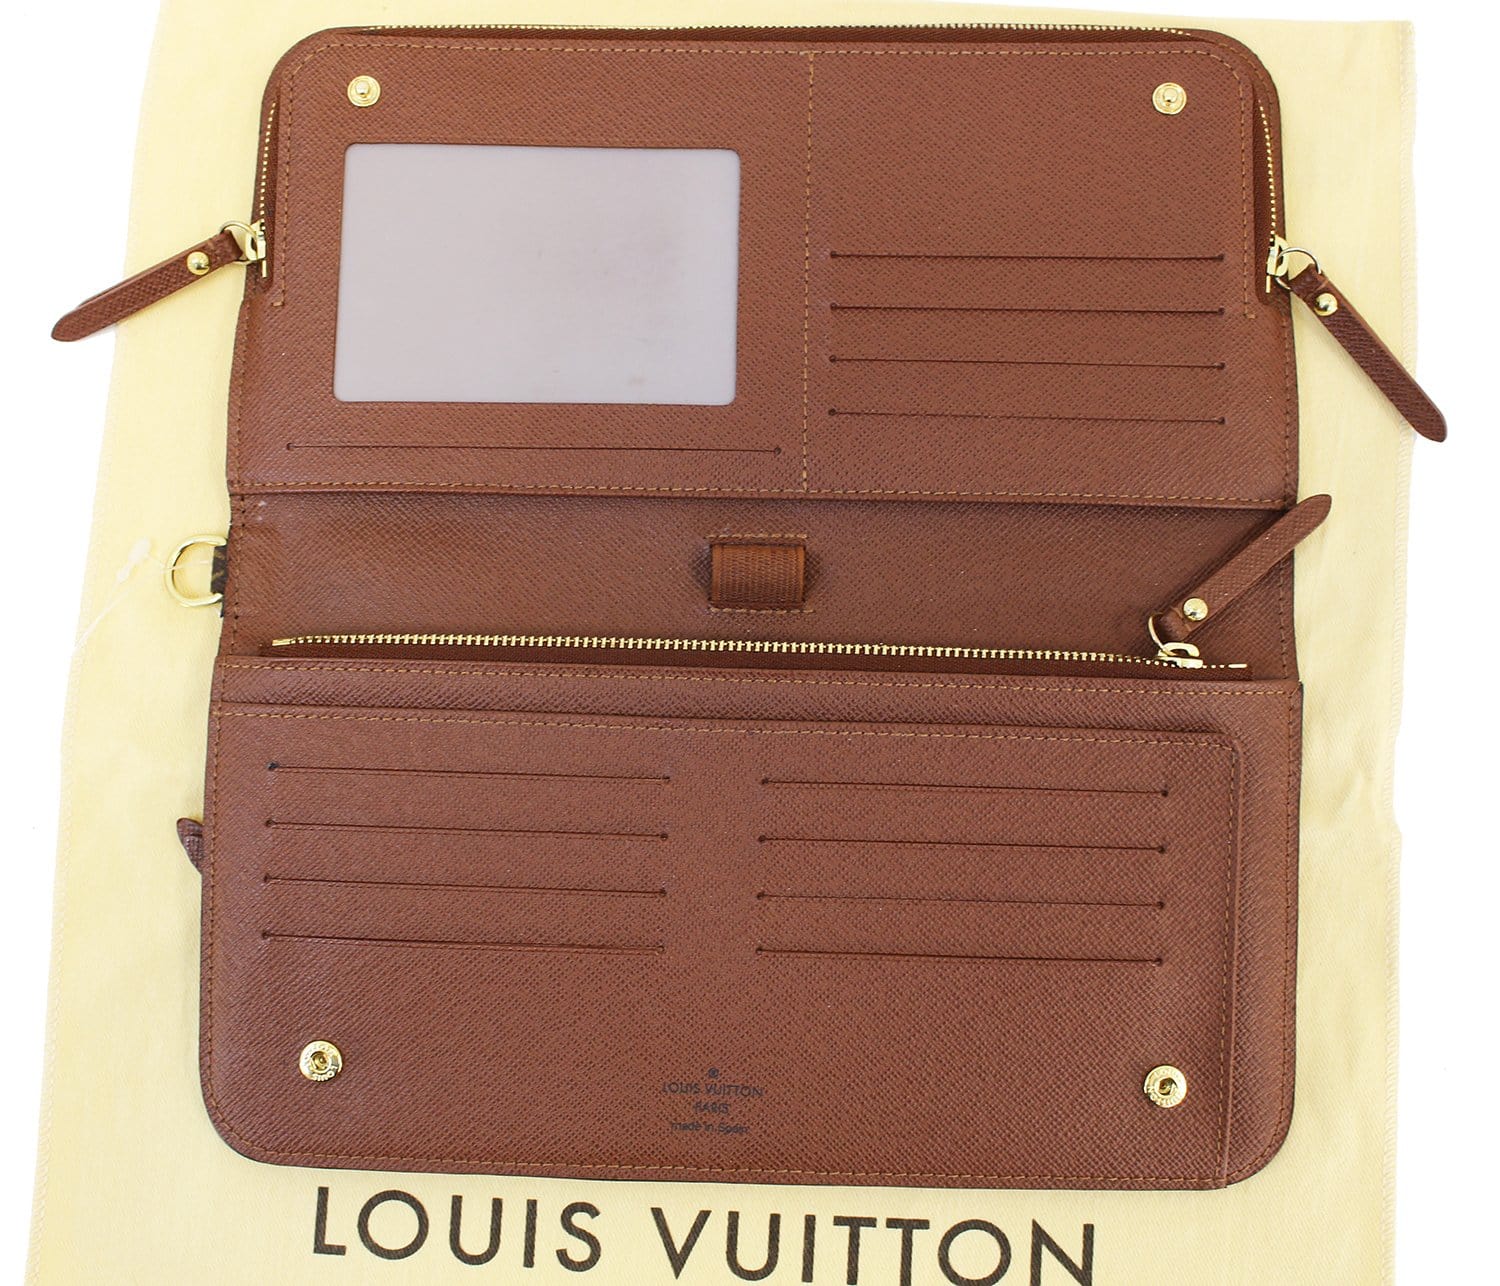 Louis Vuitton Insolite Organizer & Insolite Wallet Comparison 